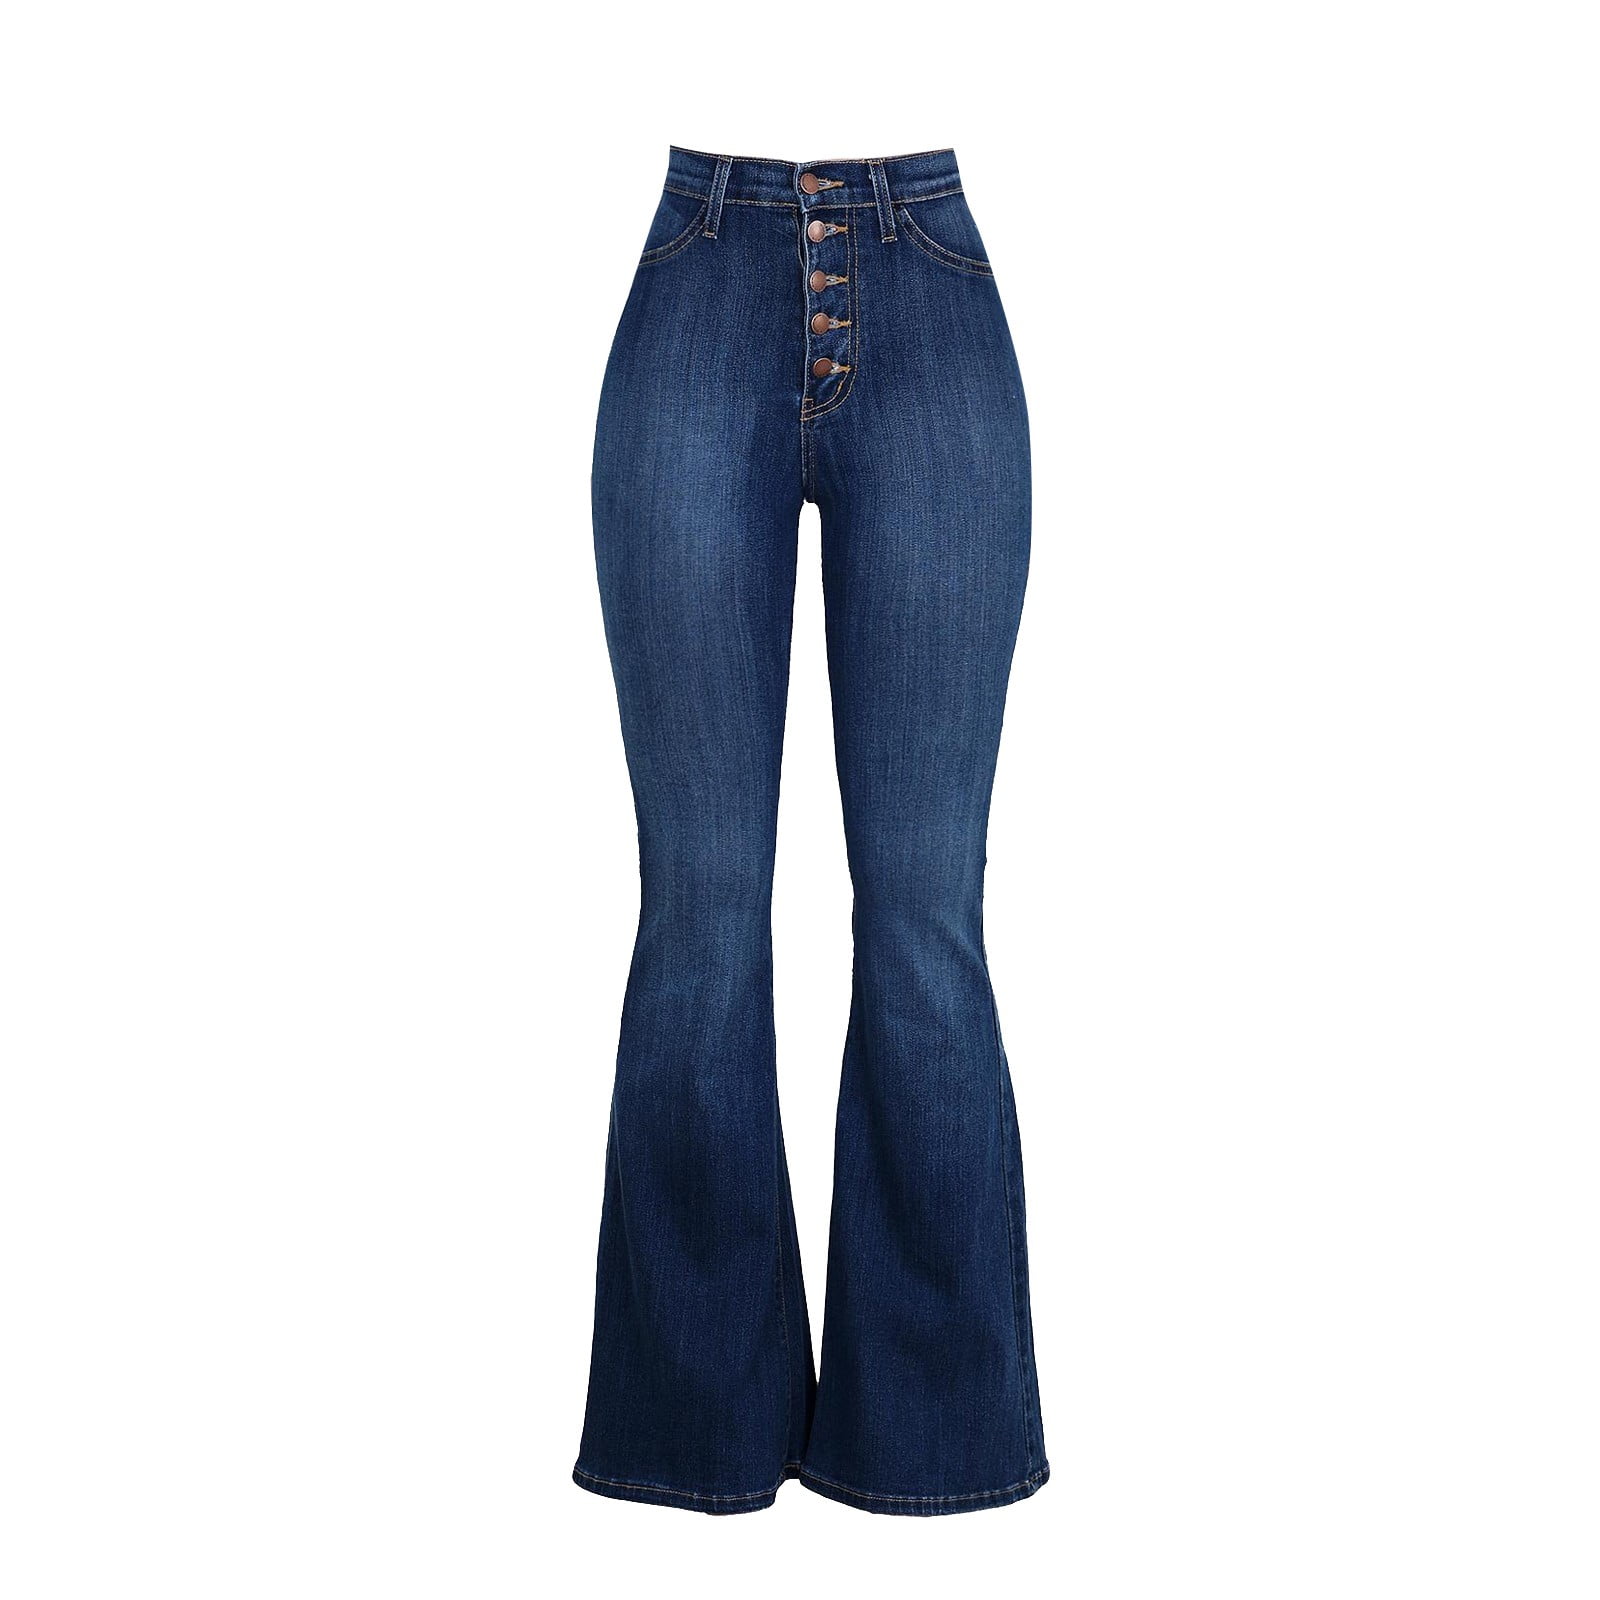 EQWLJWE Women's Fleece Lined Jeans High Waisted Stretch Denim Skinny Pants  Winter Warm Slim Fit Jeggings